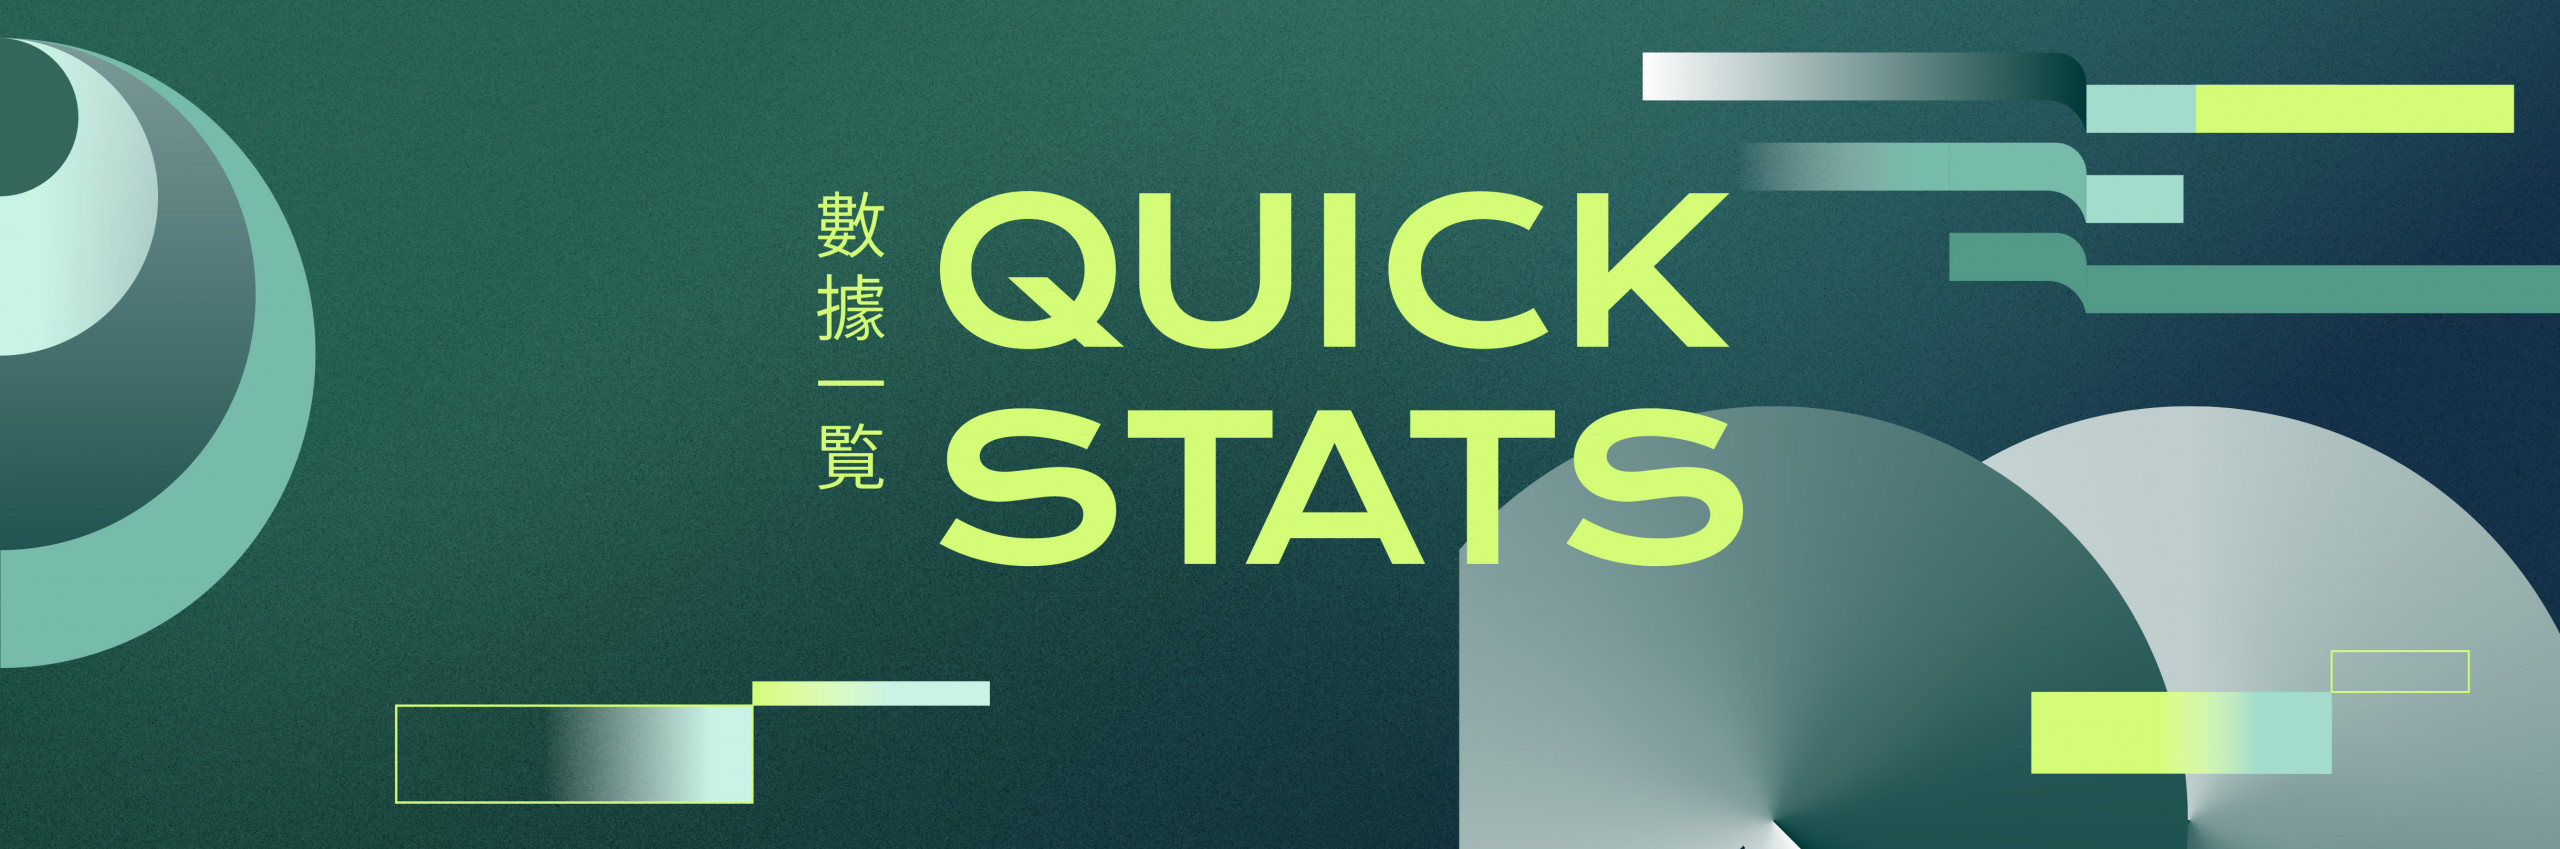 HKU Quick Stats